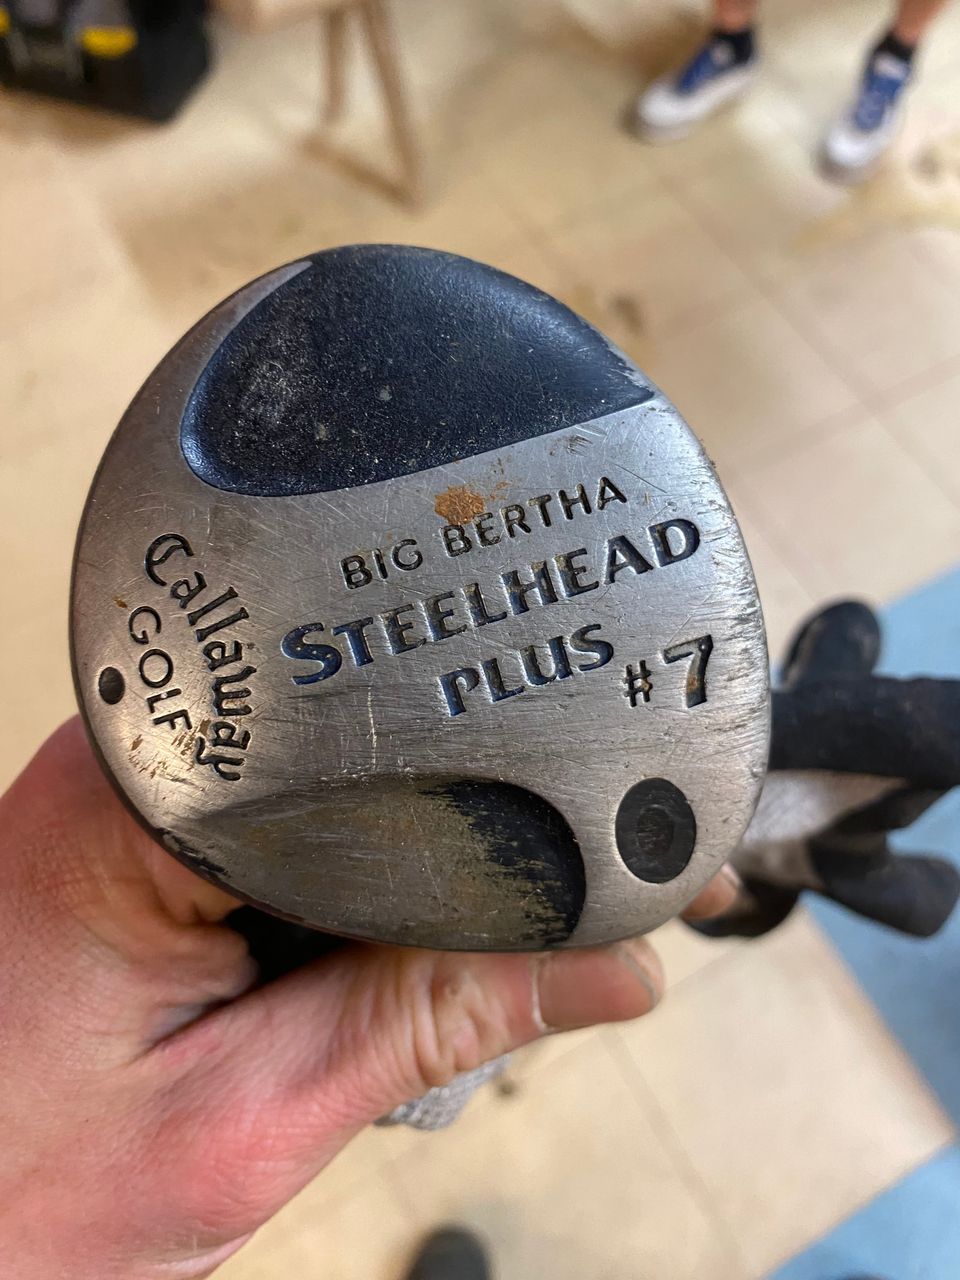 Big Bertha steelhead plus #7